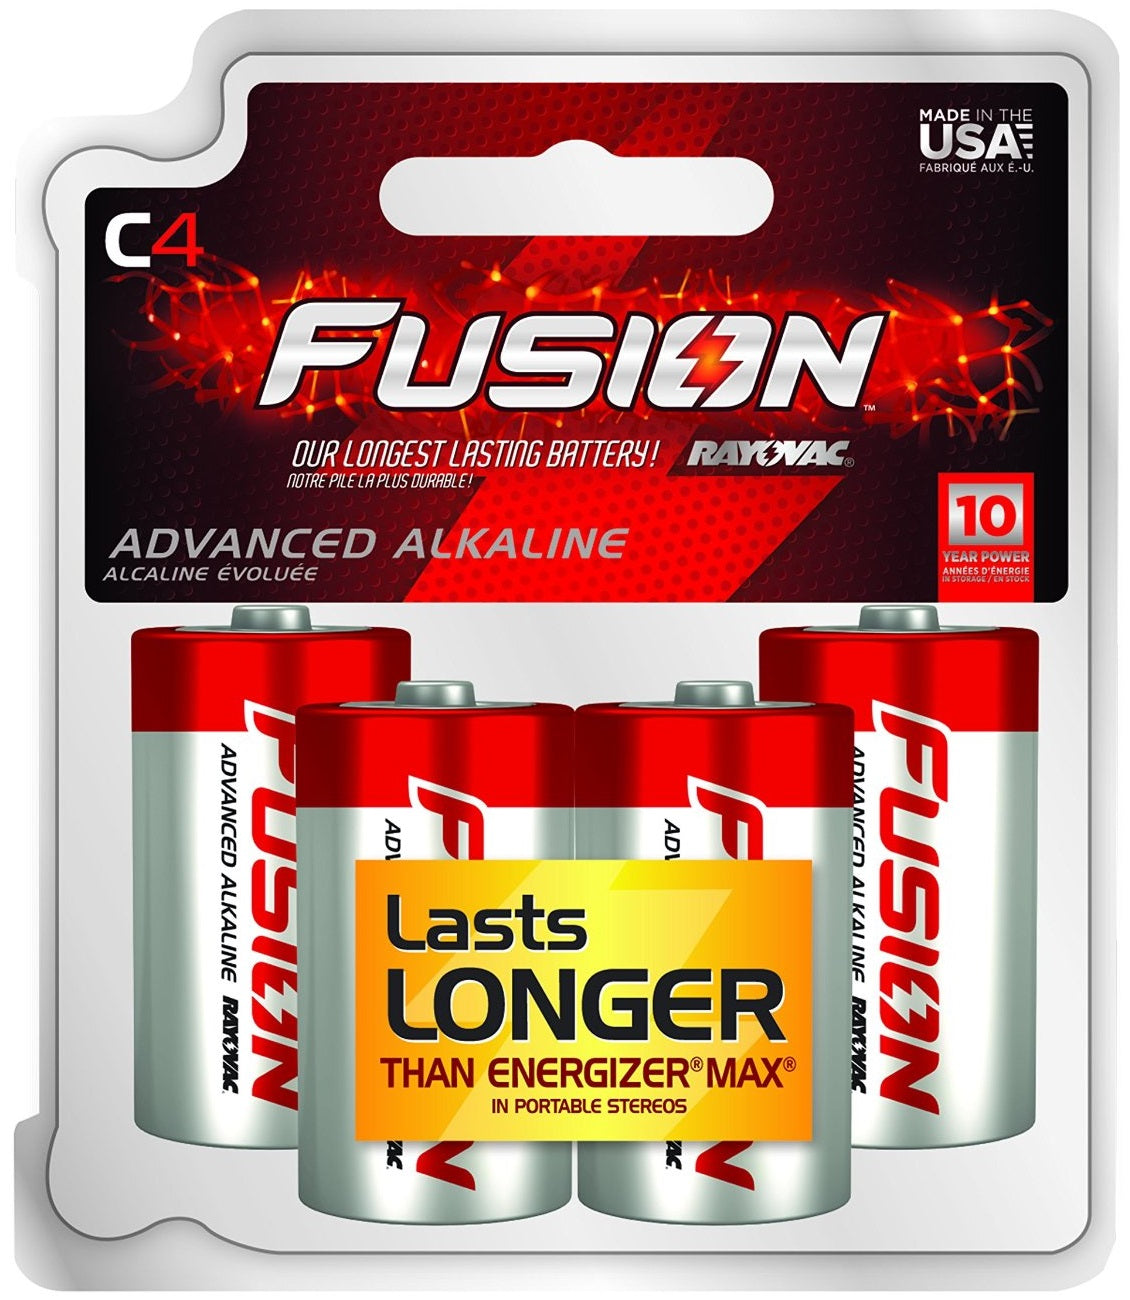 Rayovac 814-4TFUS Fusion Long-Lasting Alkaline Batteries, C, 4/Pack